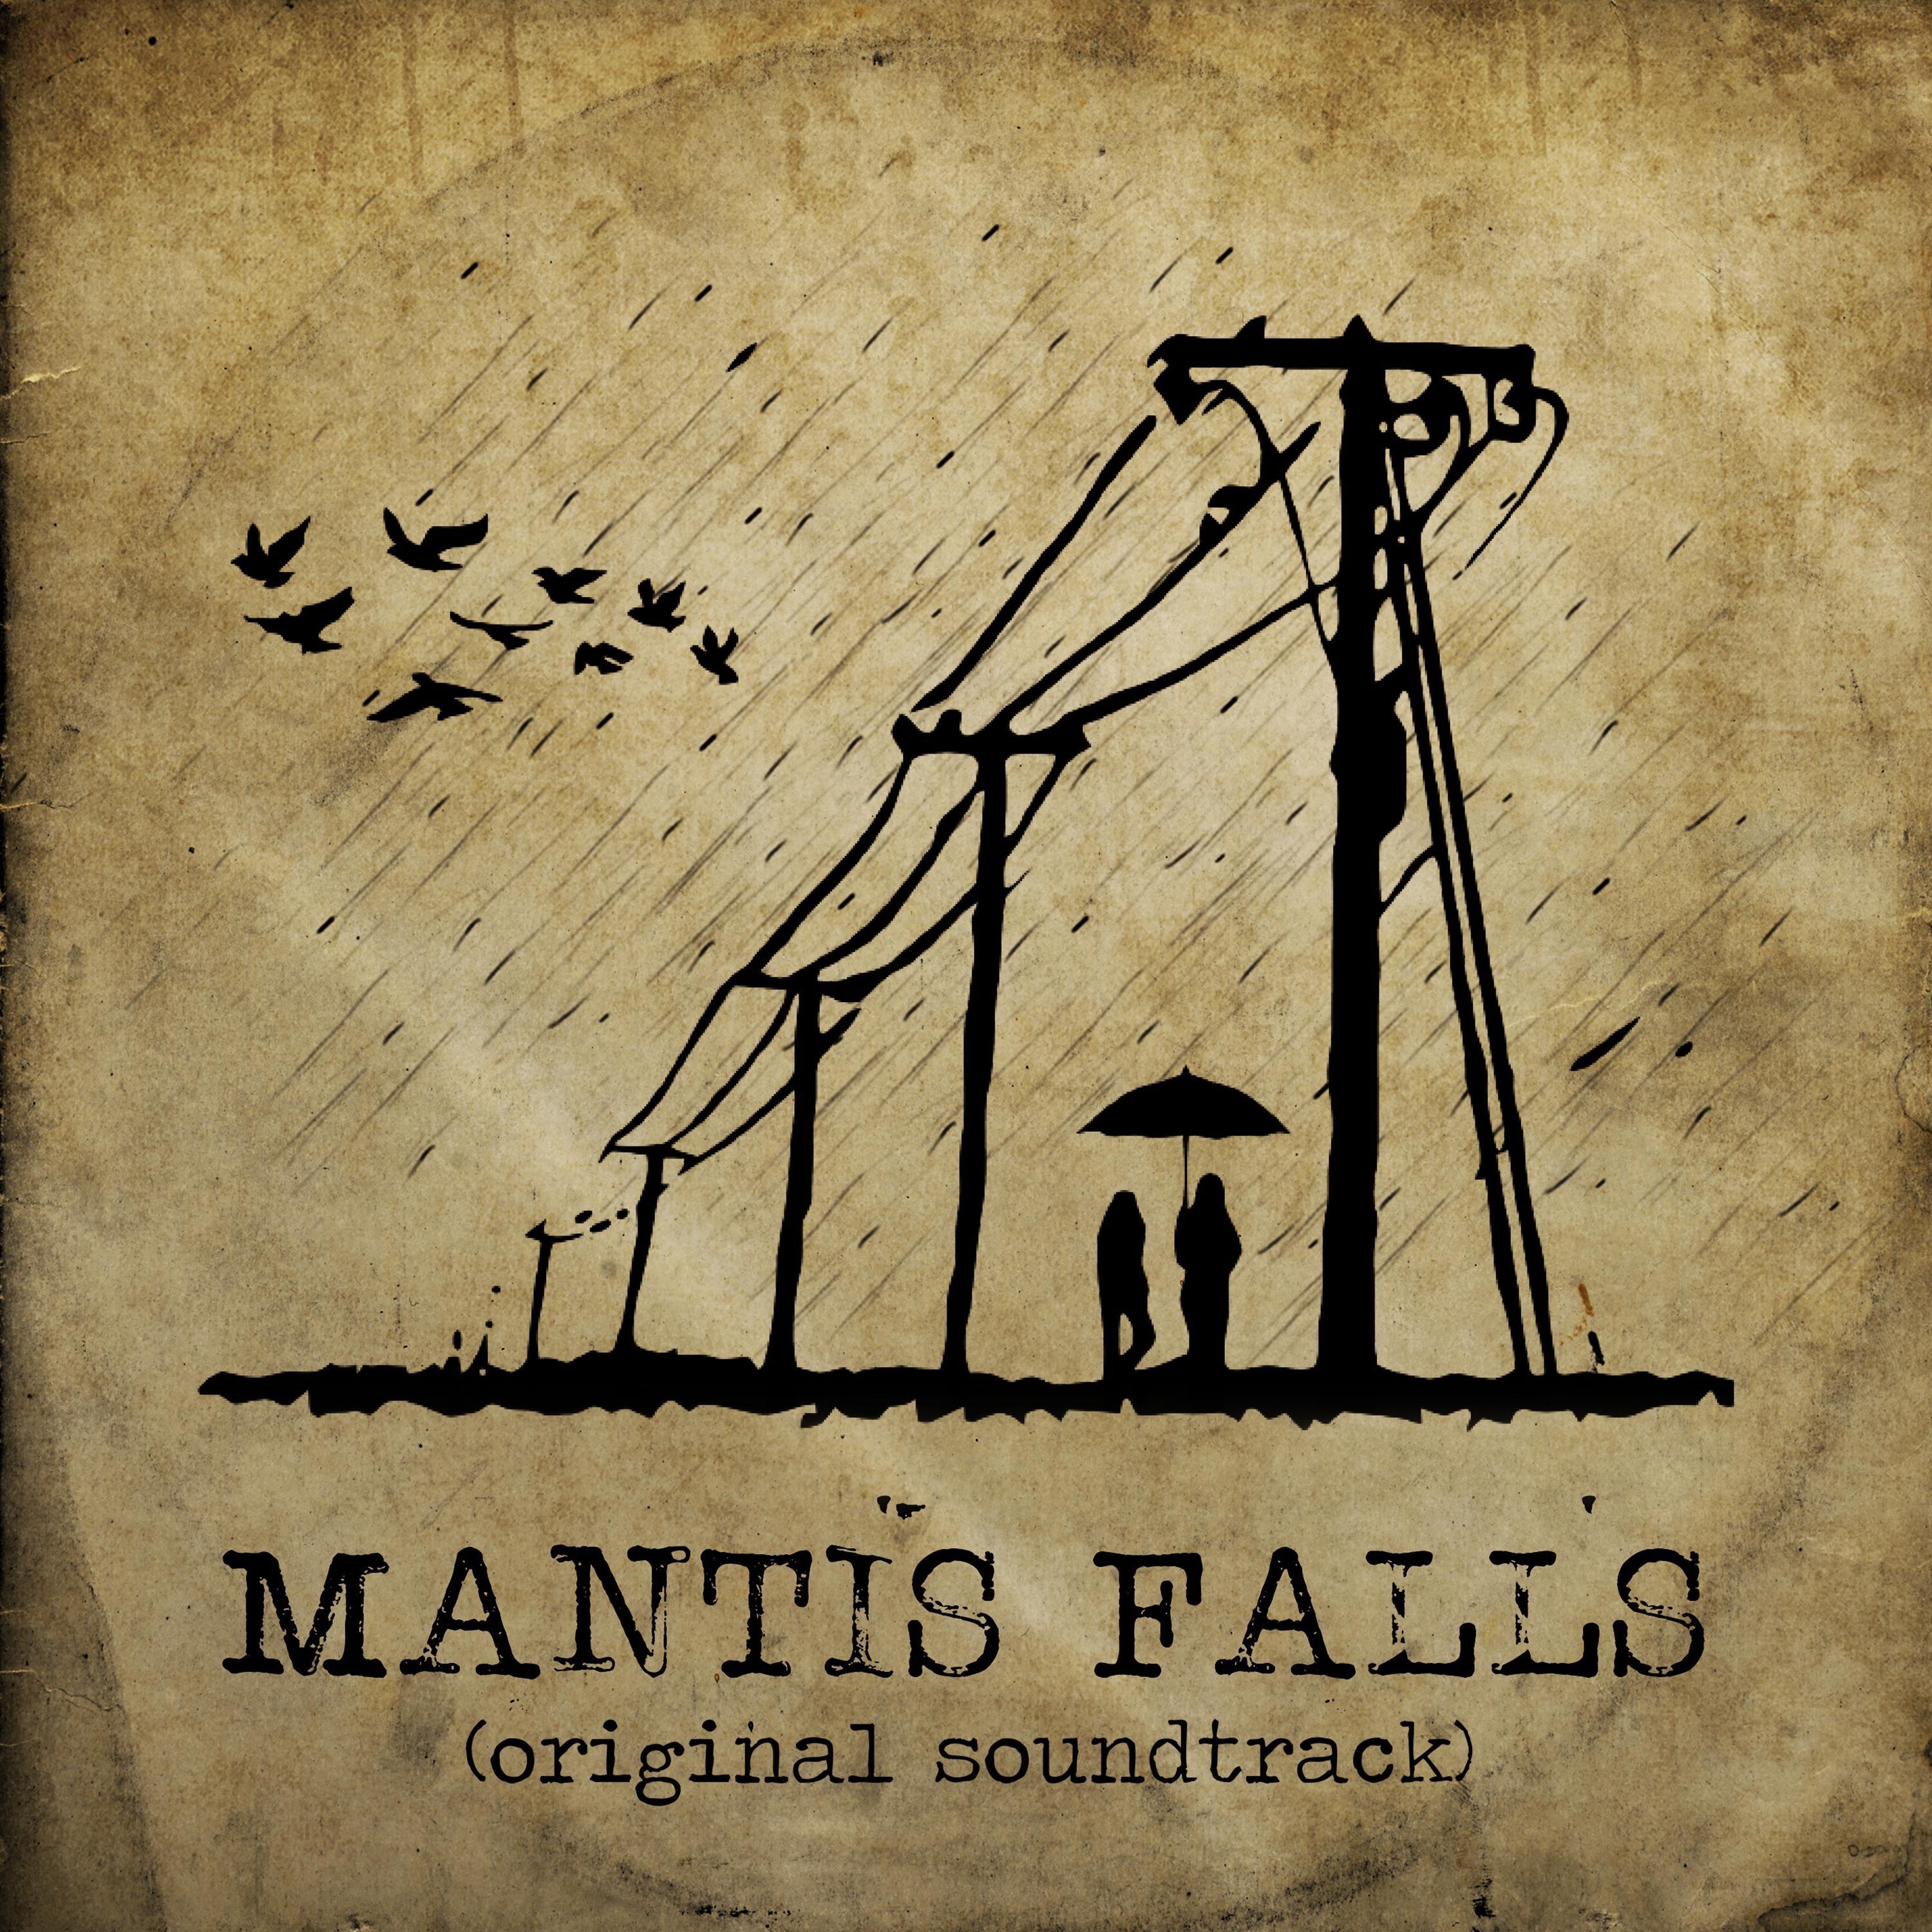 Mantis Soundtrack. Blue Mantis Soundtrack. Graffiti Falls OST Soundtrack. Fall soundtrack